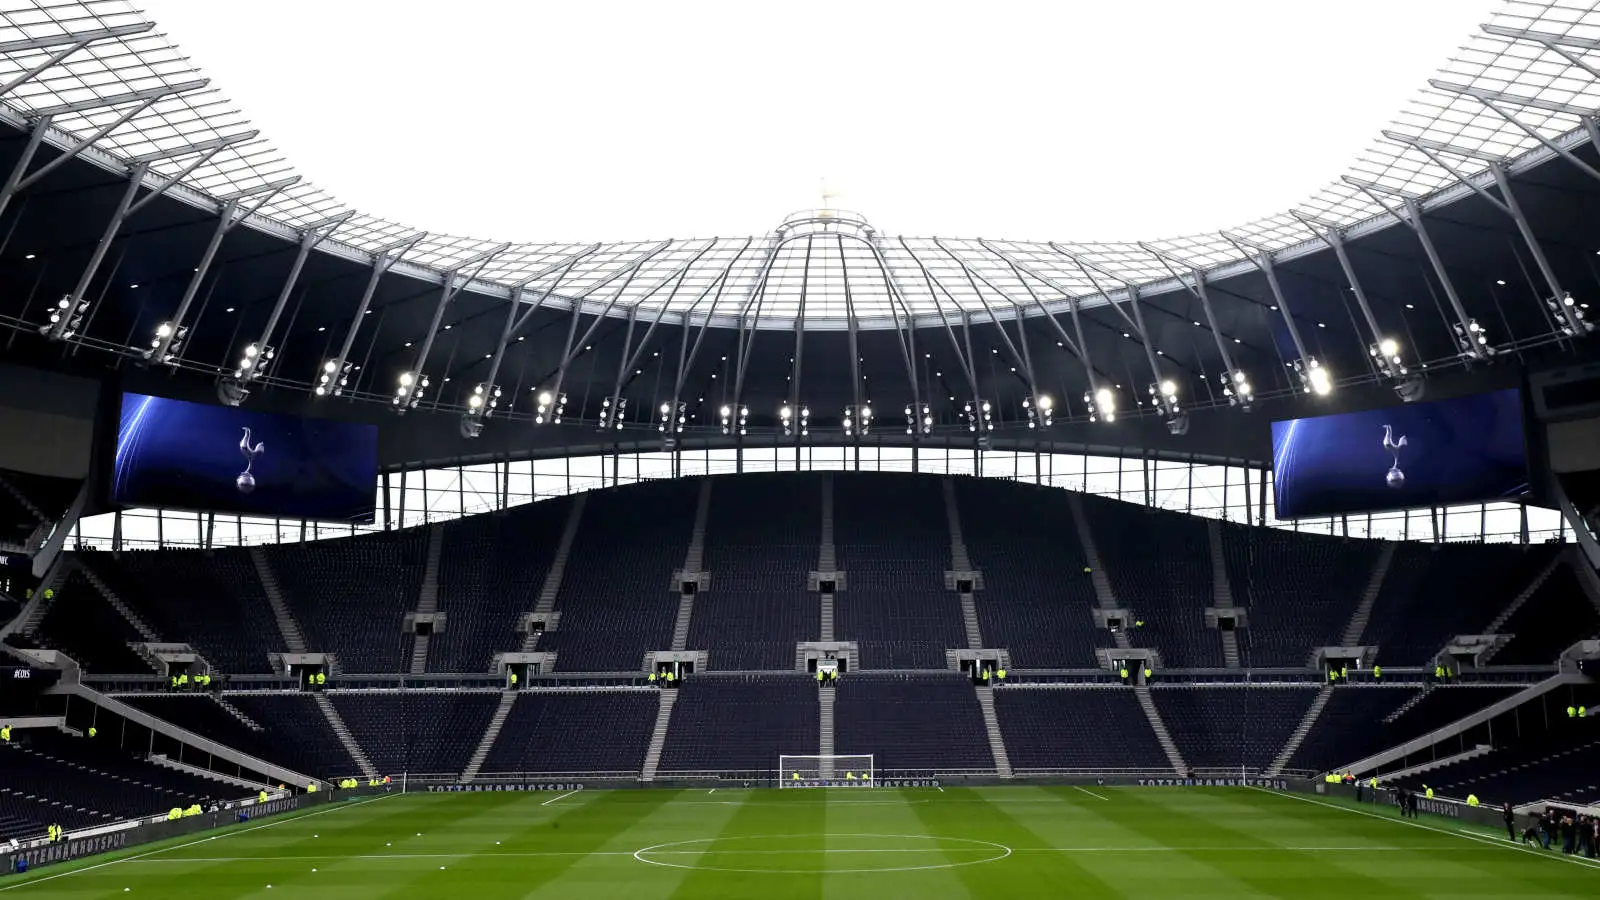 The Tottenham Hotspur Stadium, home of Spurs